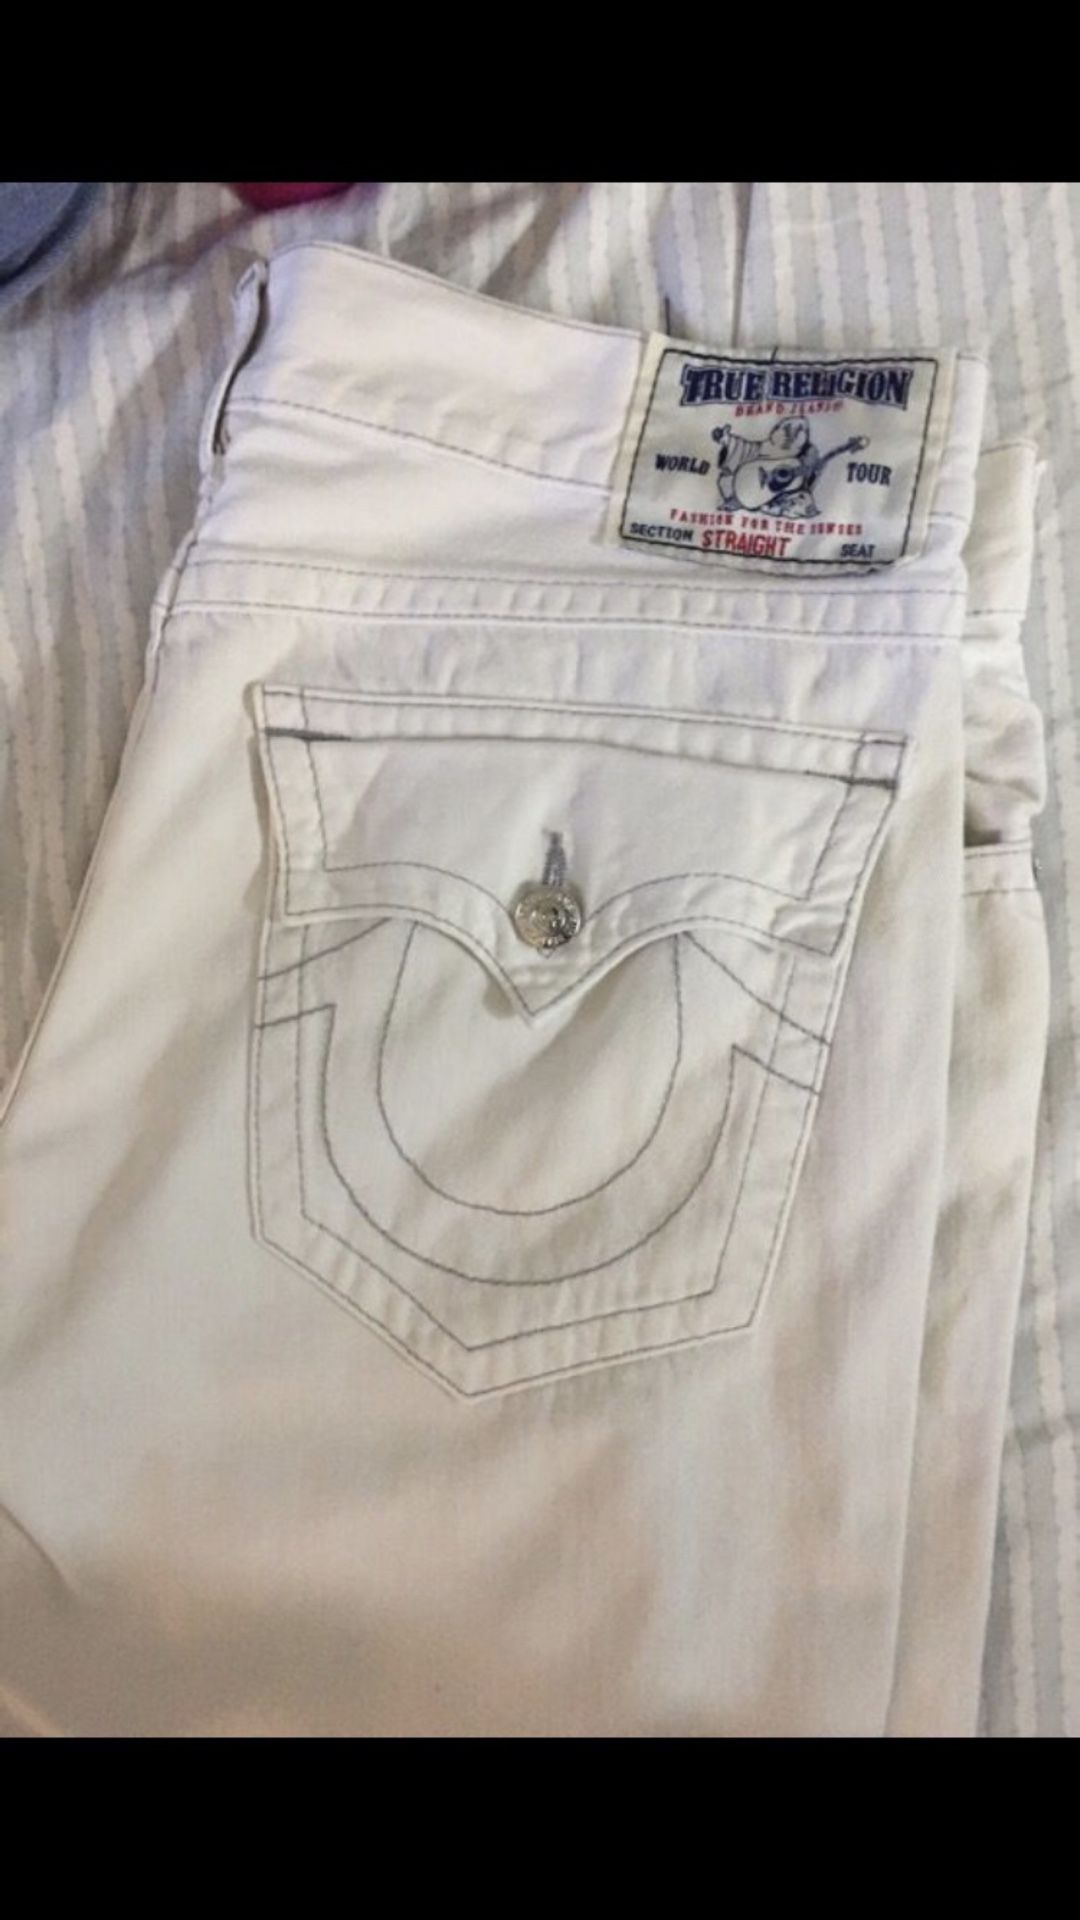 True religion white jeans size 40